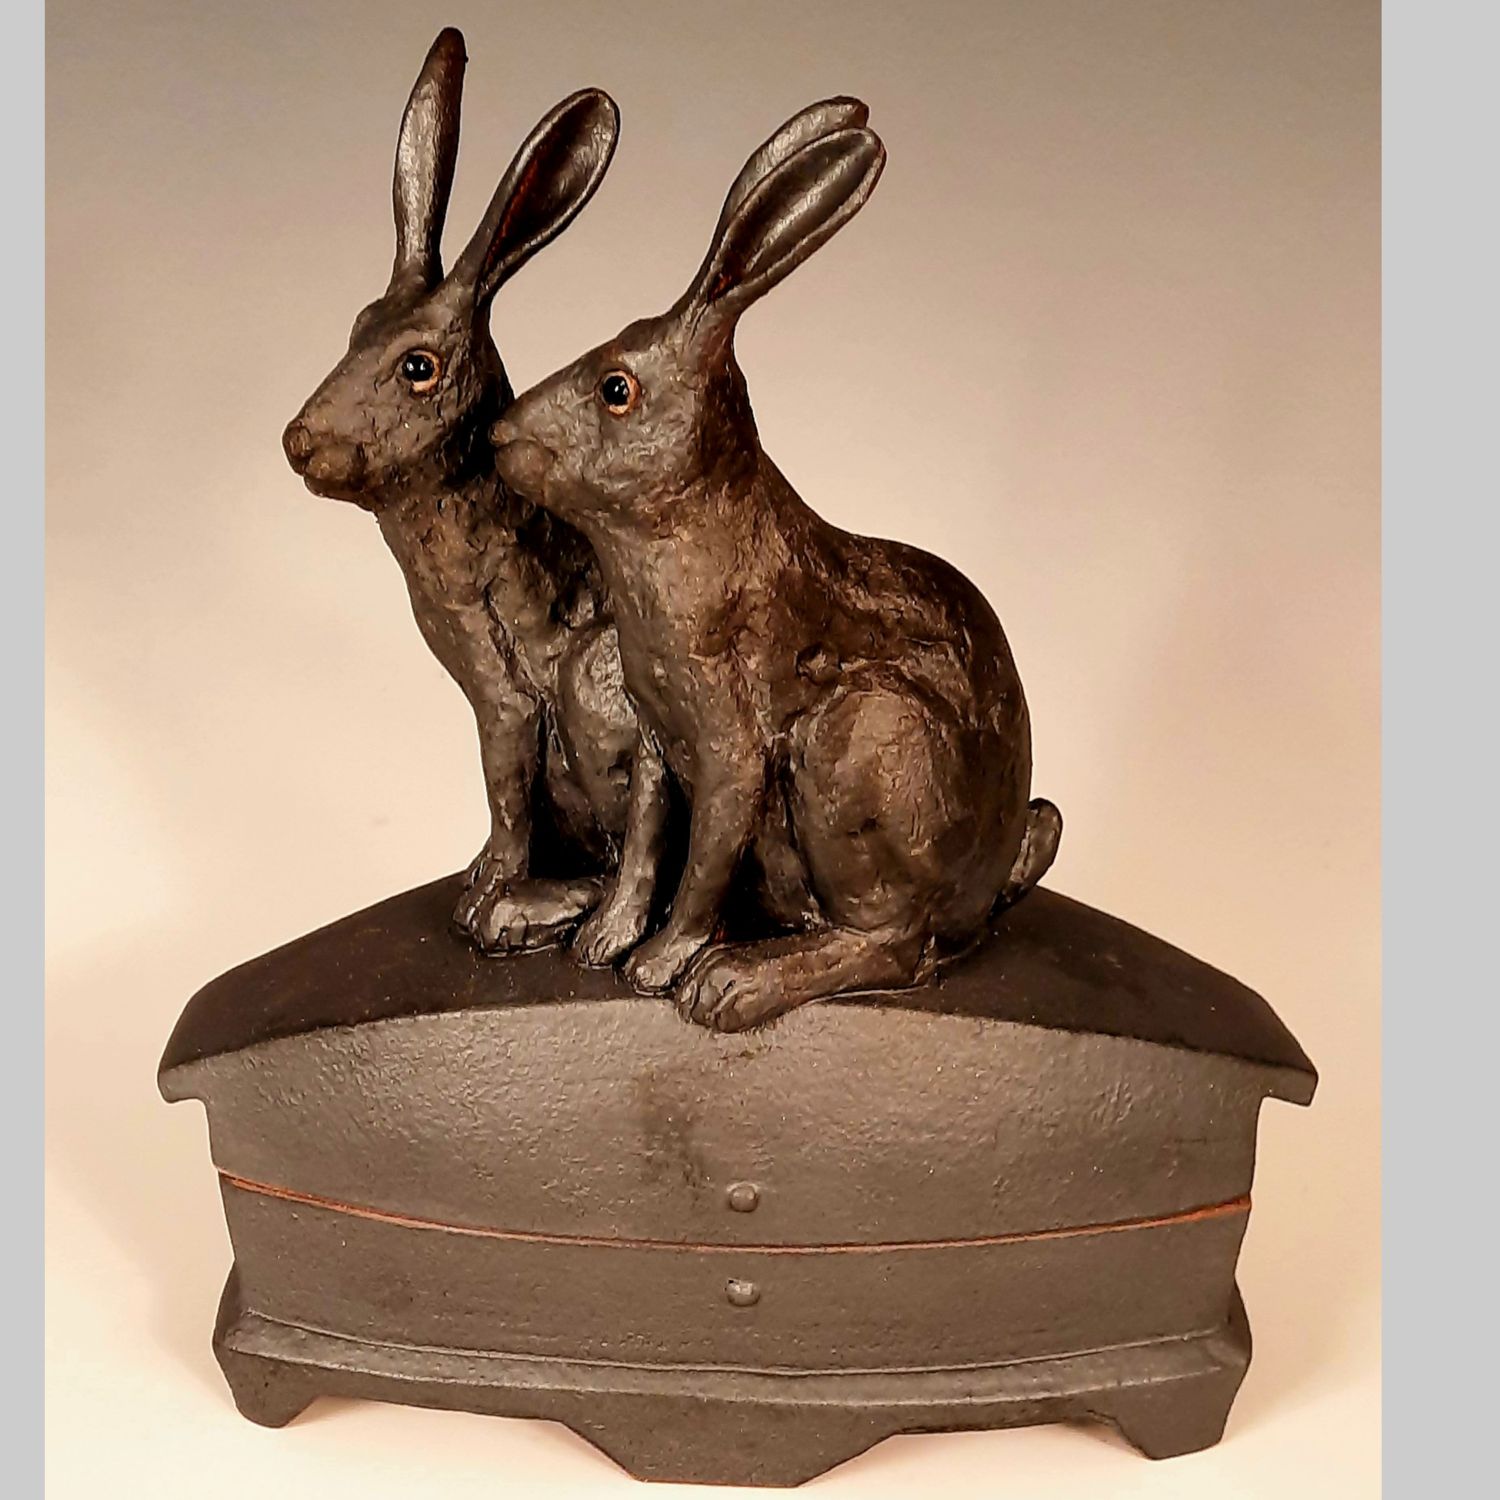 Bruce Cochrane & Zsuzsa Monostory: Rabbit box – Couple Product Image 1 of 1